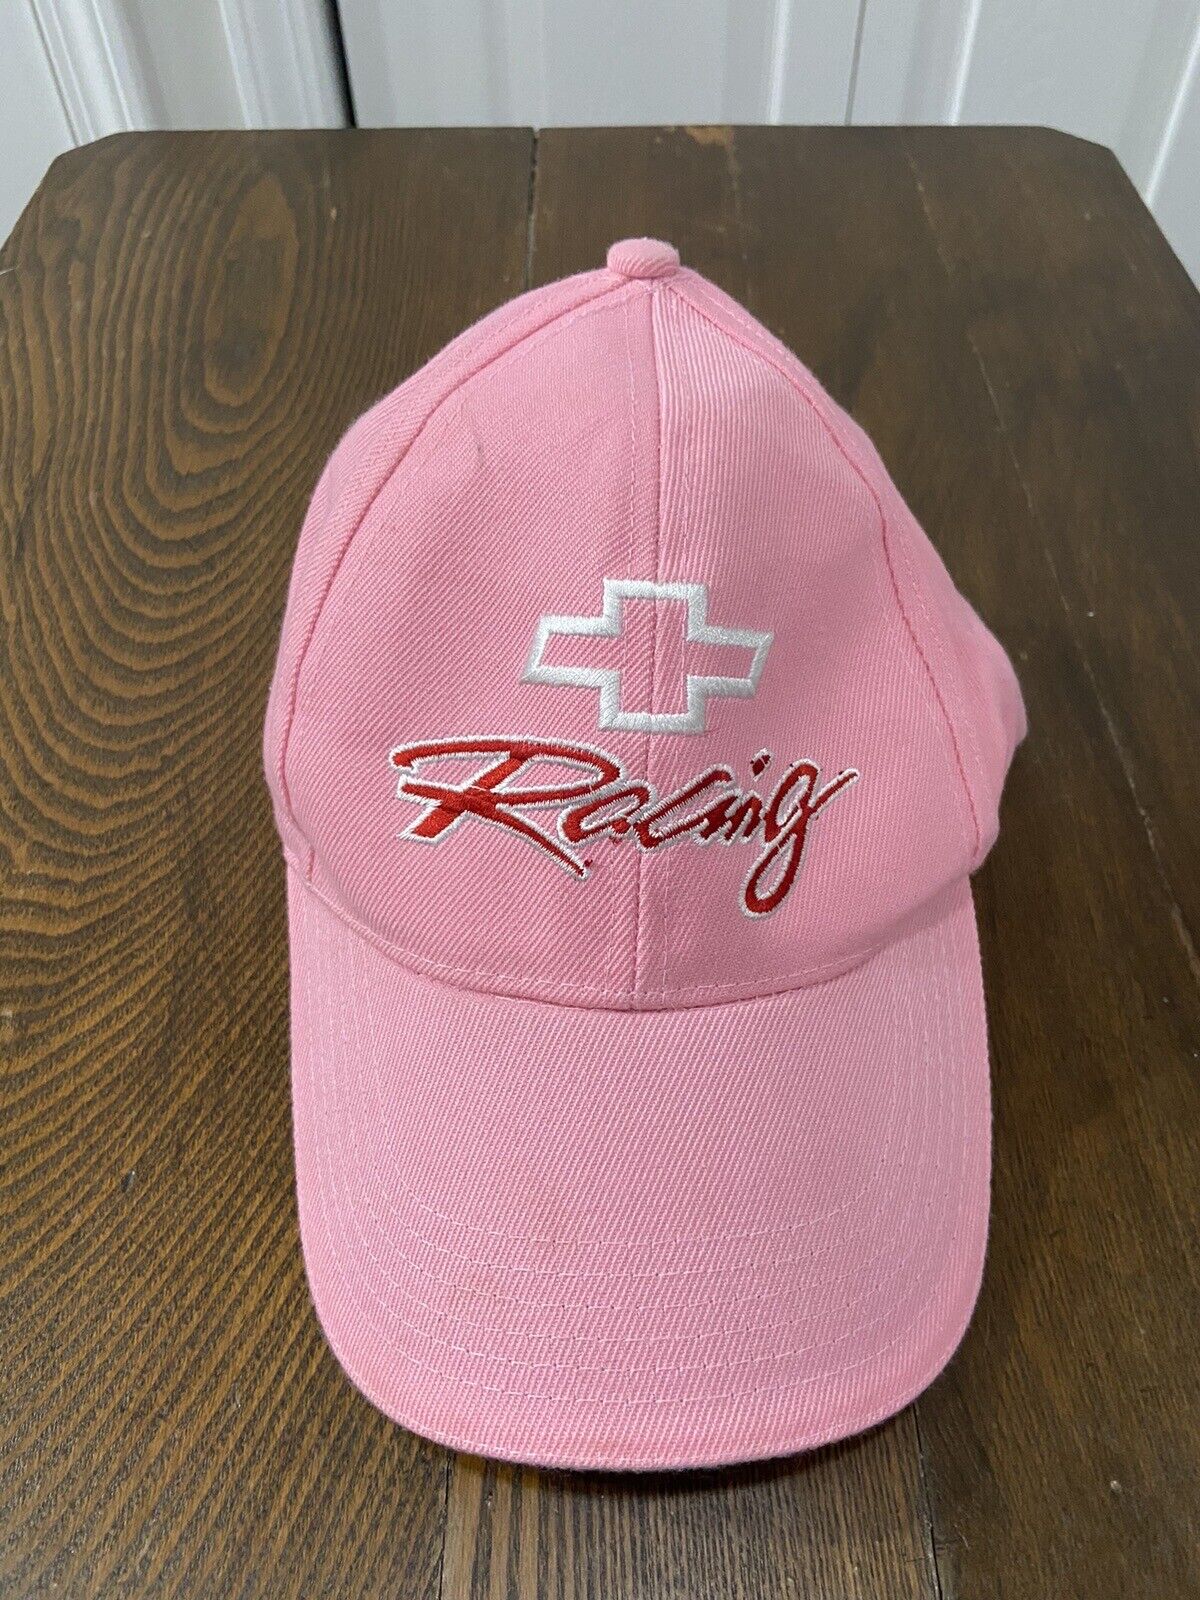 Chevy  Racing Adjustable Hat Pink